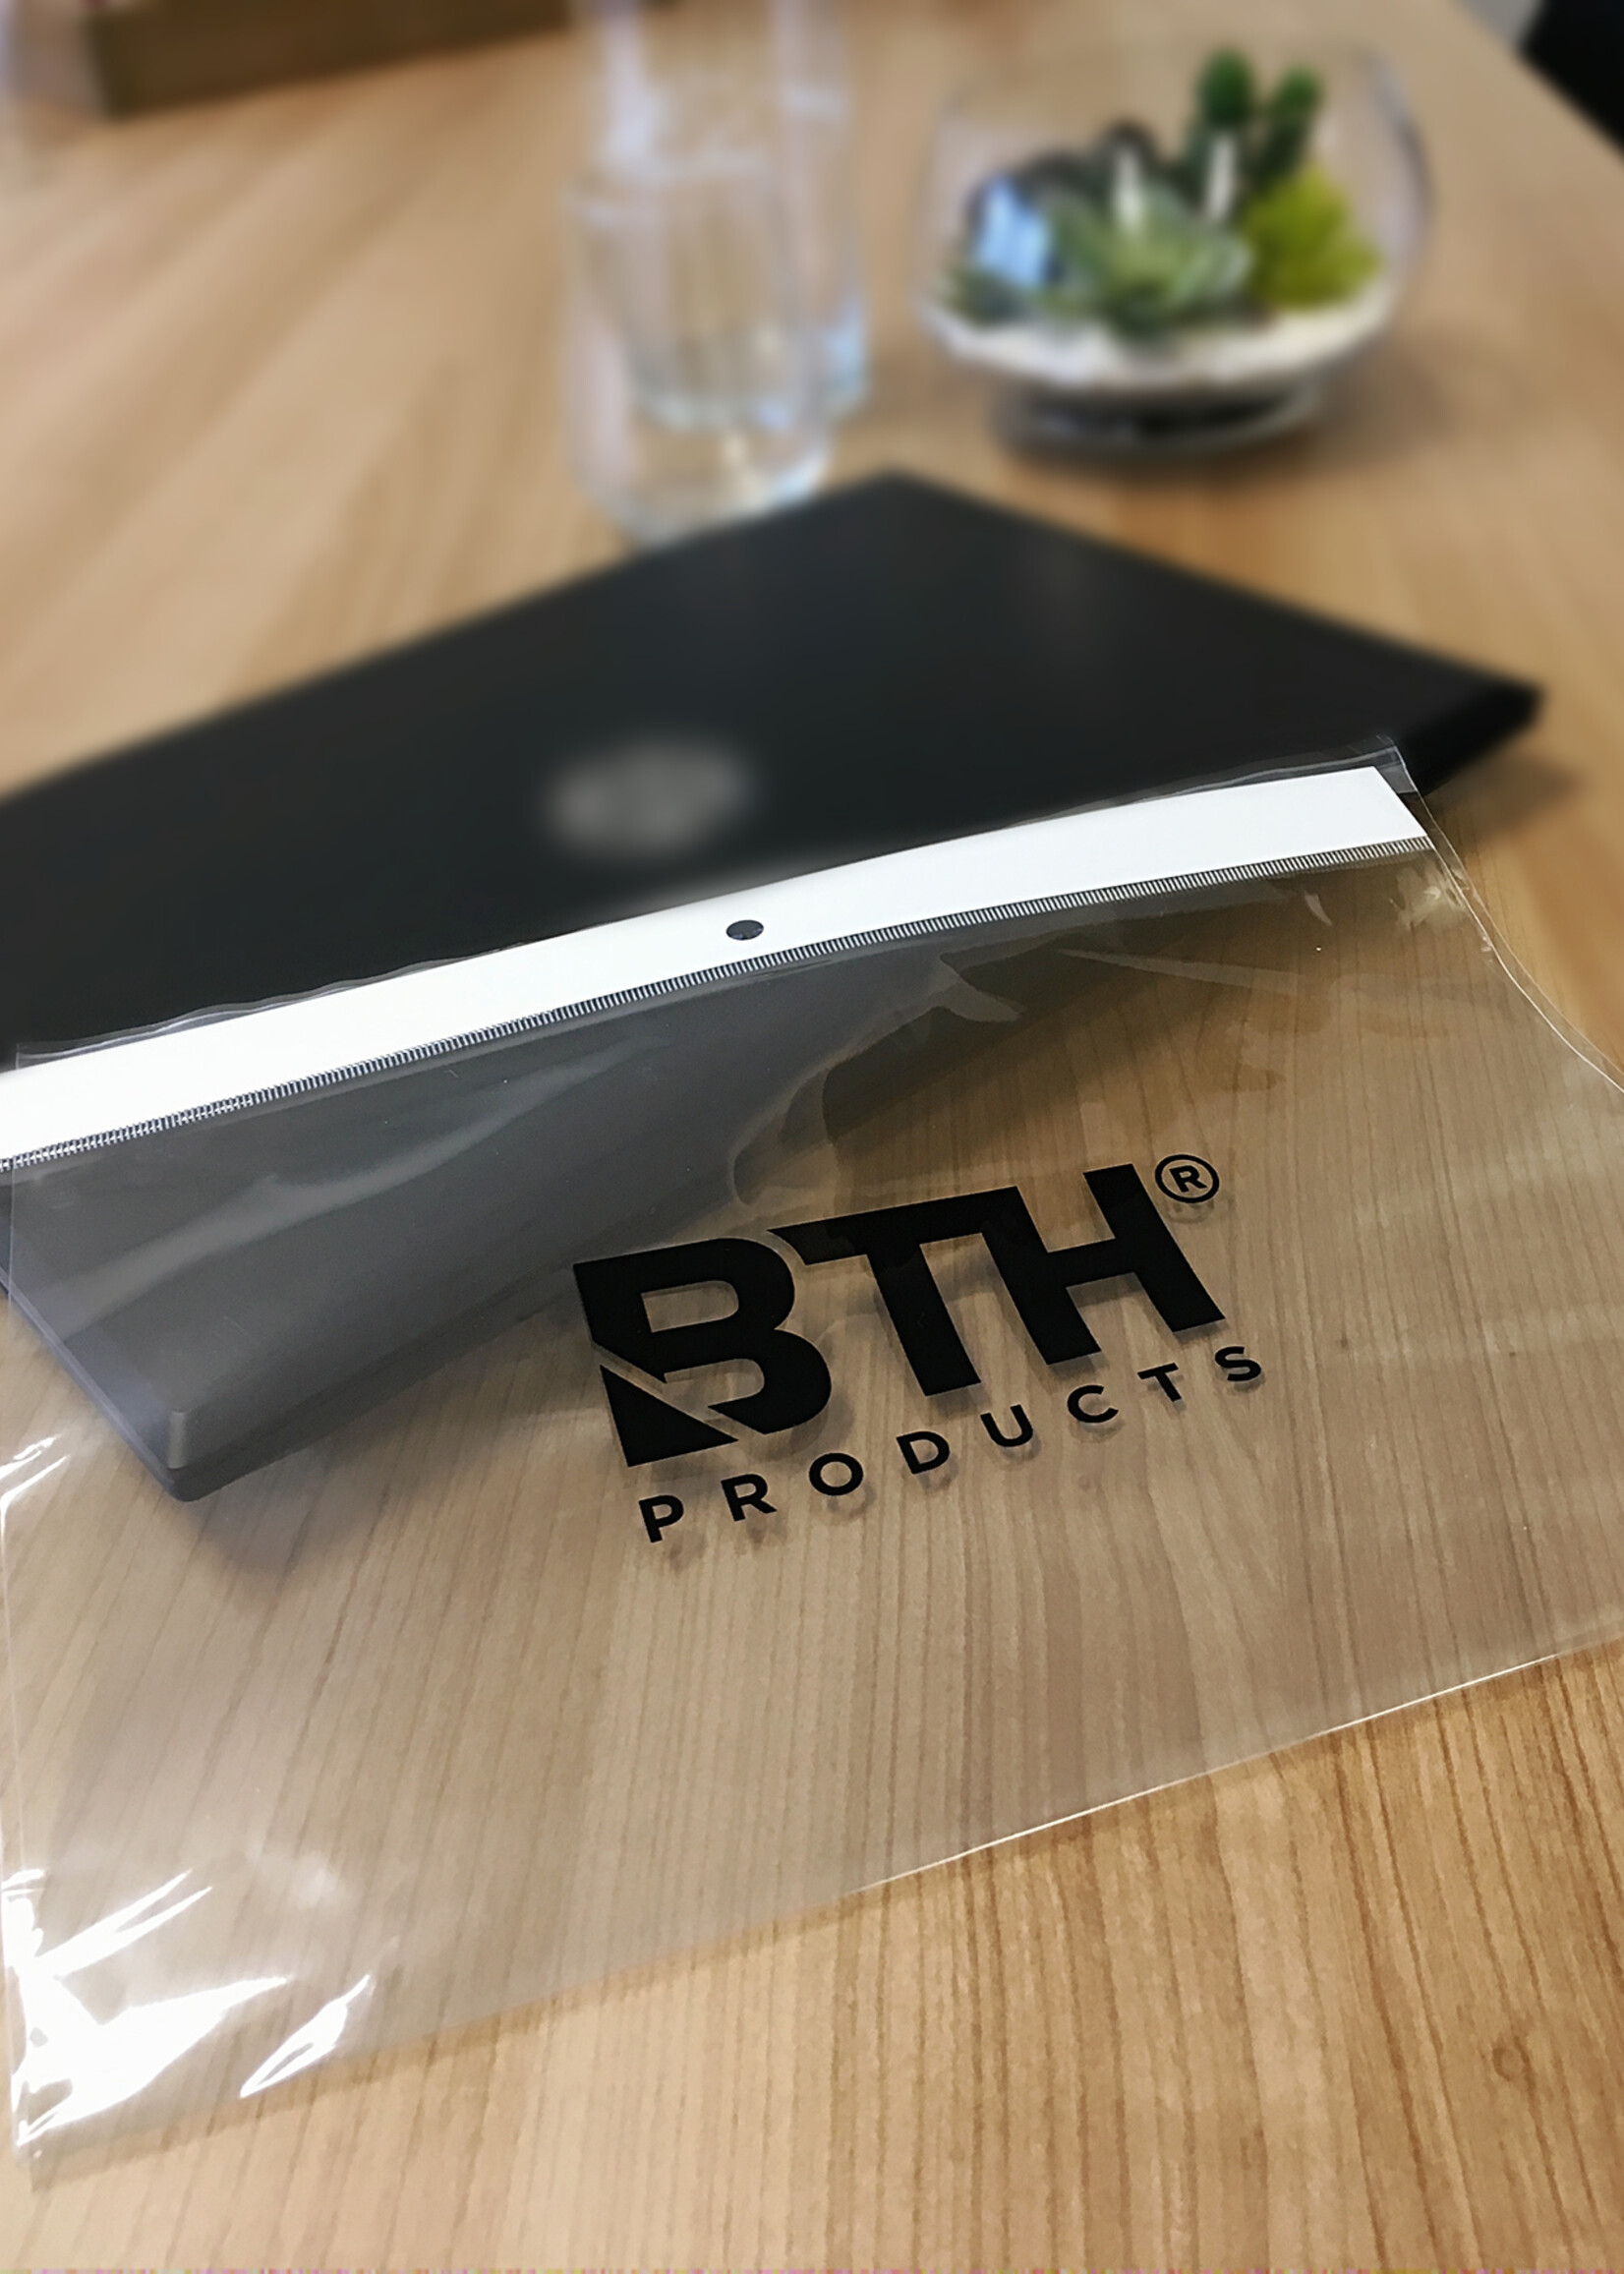 BTH Xiaomi Pad 5 Hoes Book Case Hoesje Luxe Cover - Xiaomi Pad 5 Hoesje - Zwart